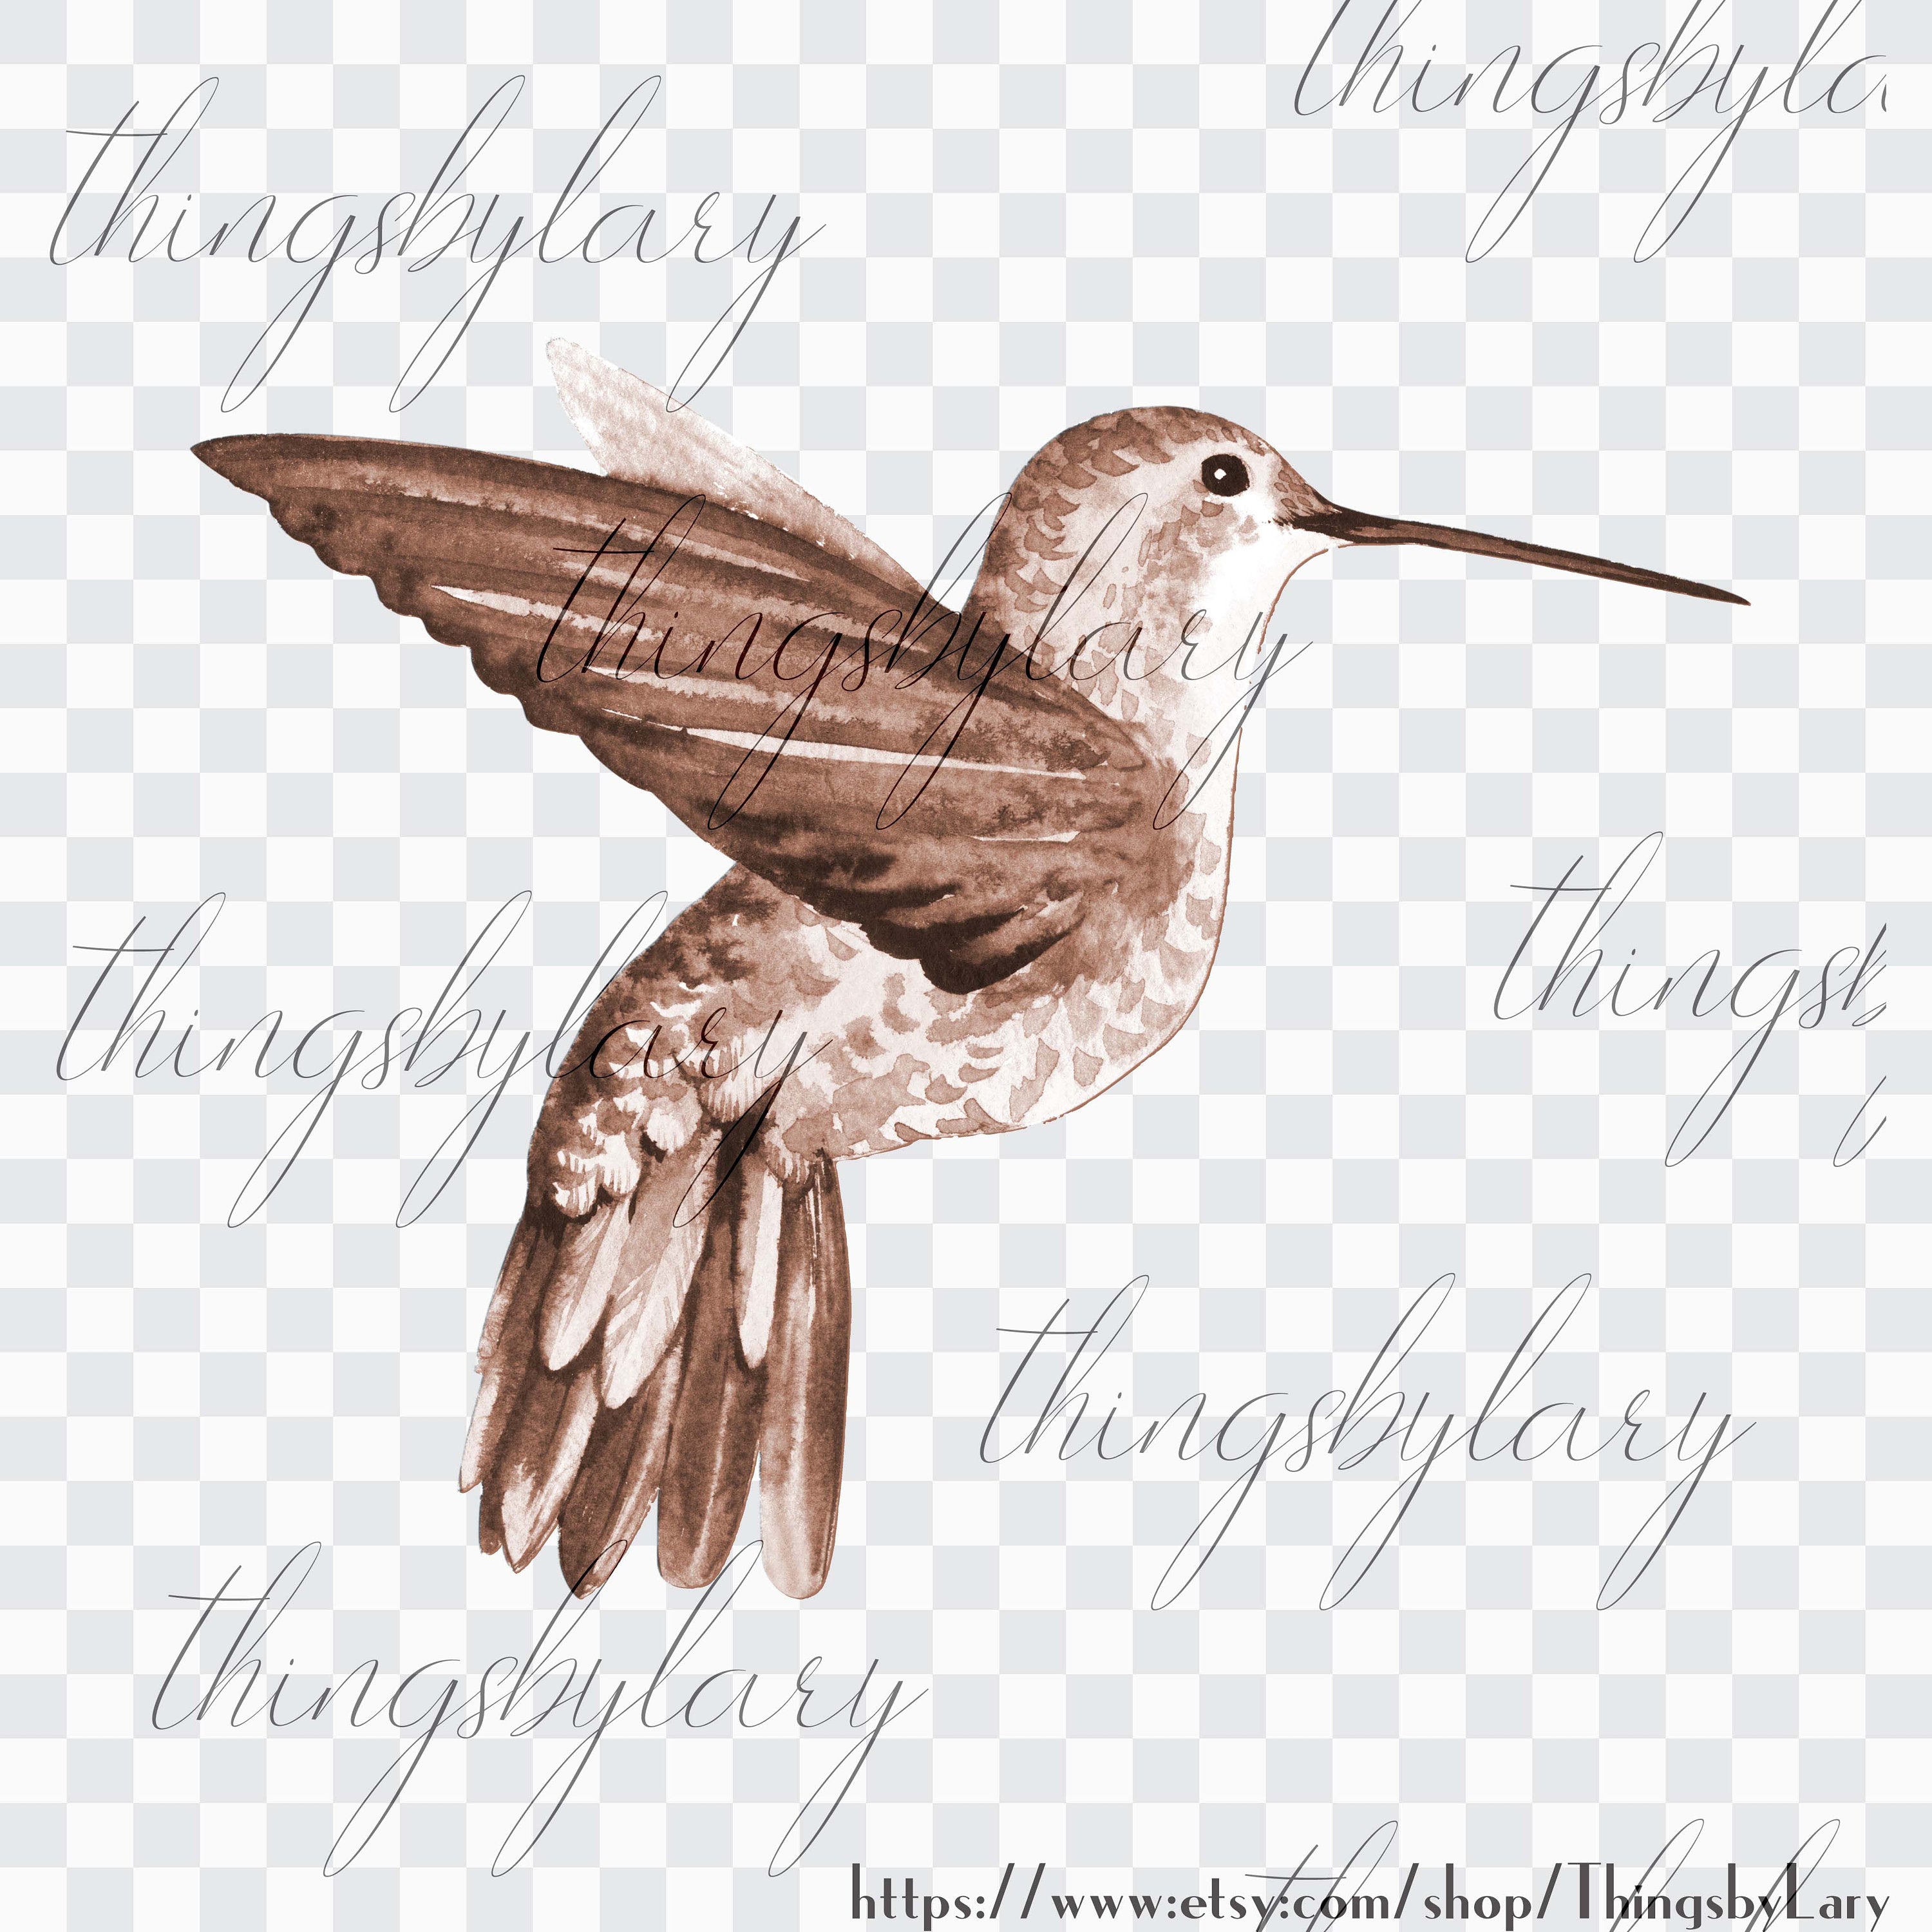 100 Watercolor Hummingbird Cliparts, Planner Clipart, Watercolor Bird Clipart, Wedding Graphic, Romantic Graphic, Hummingbird Design